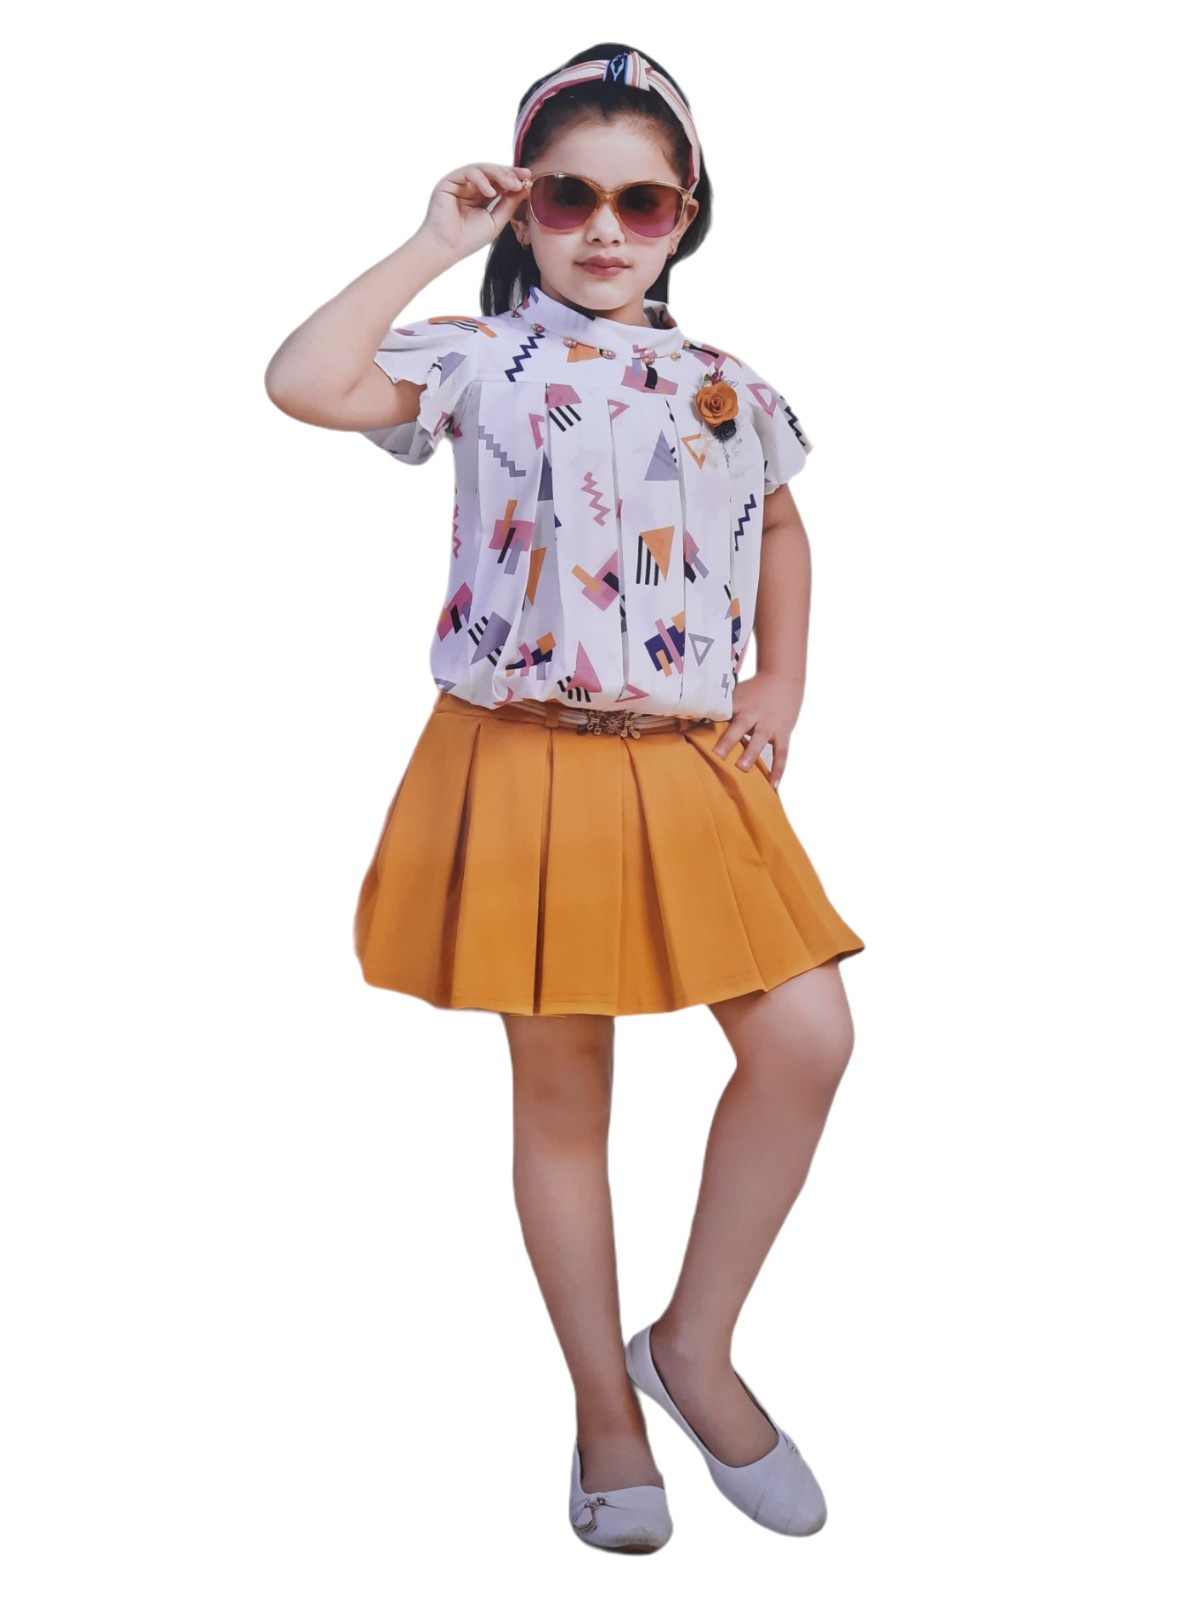 Little Girl Skirt Slide Stock Photos  Free  RoyaltyFree Stock Photos  from Dreamstime